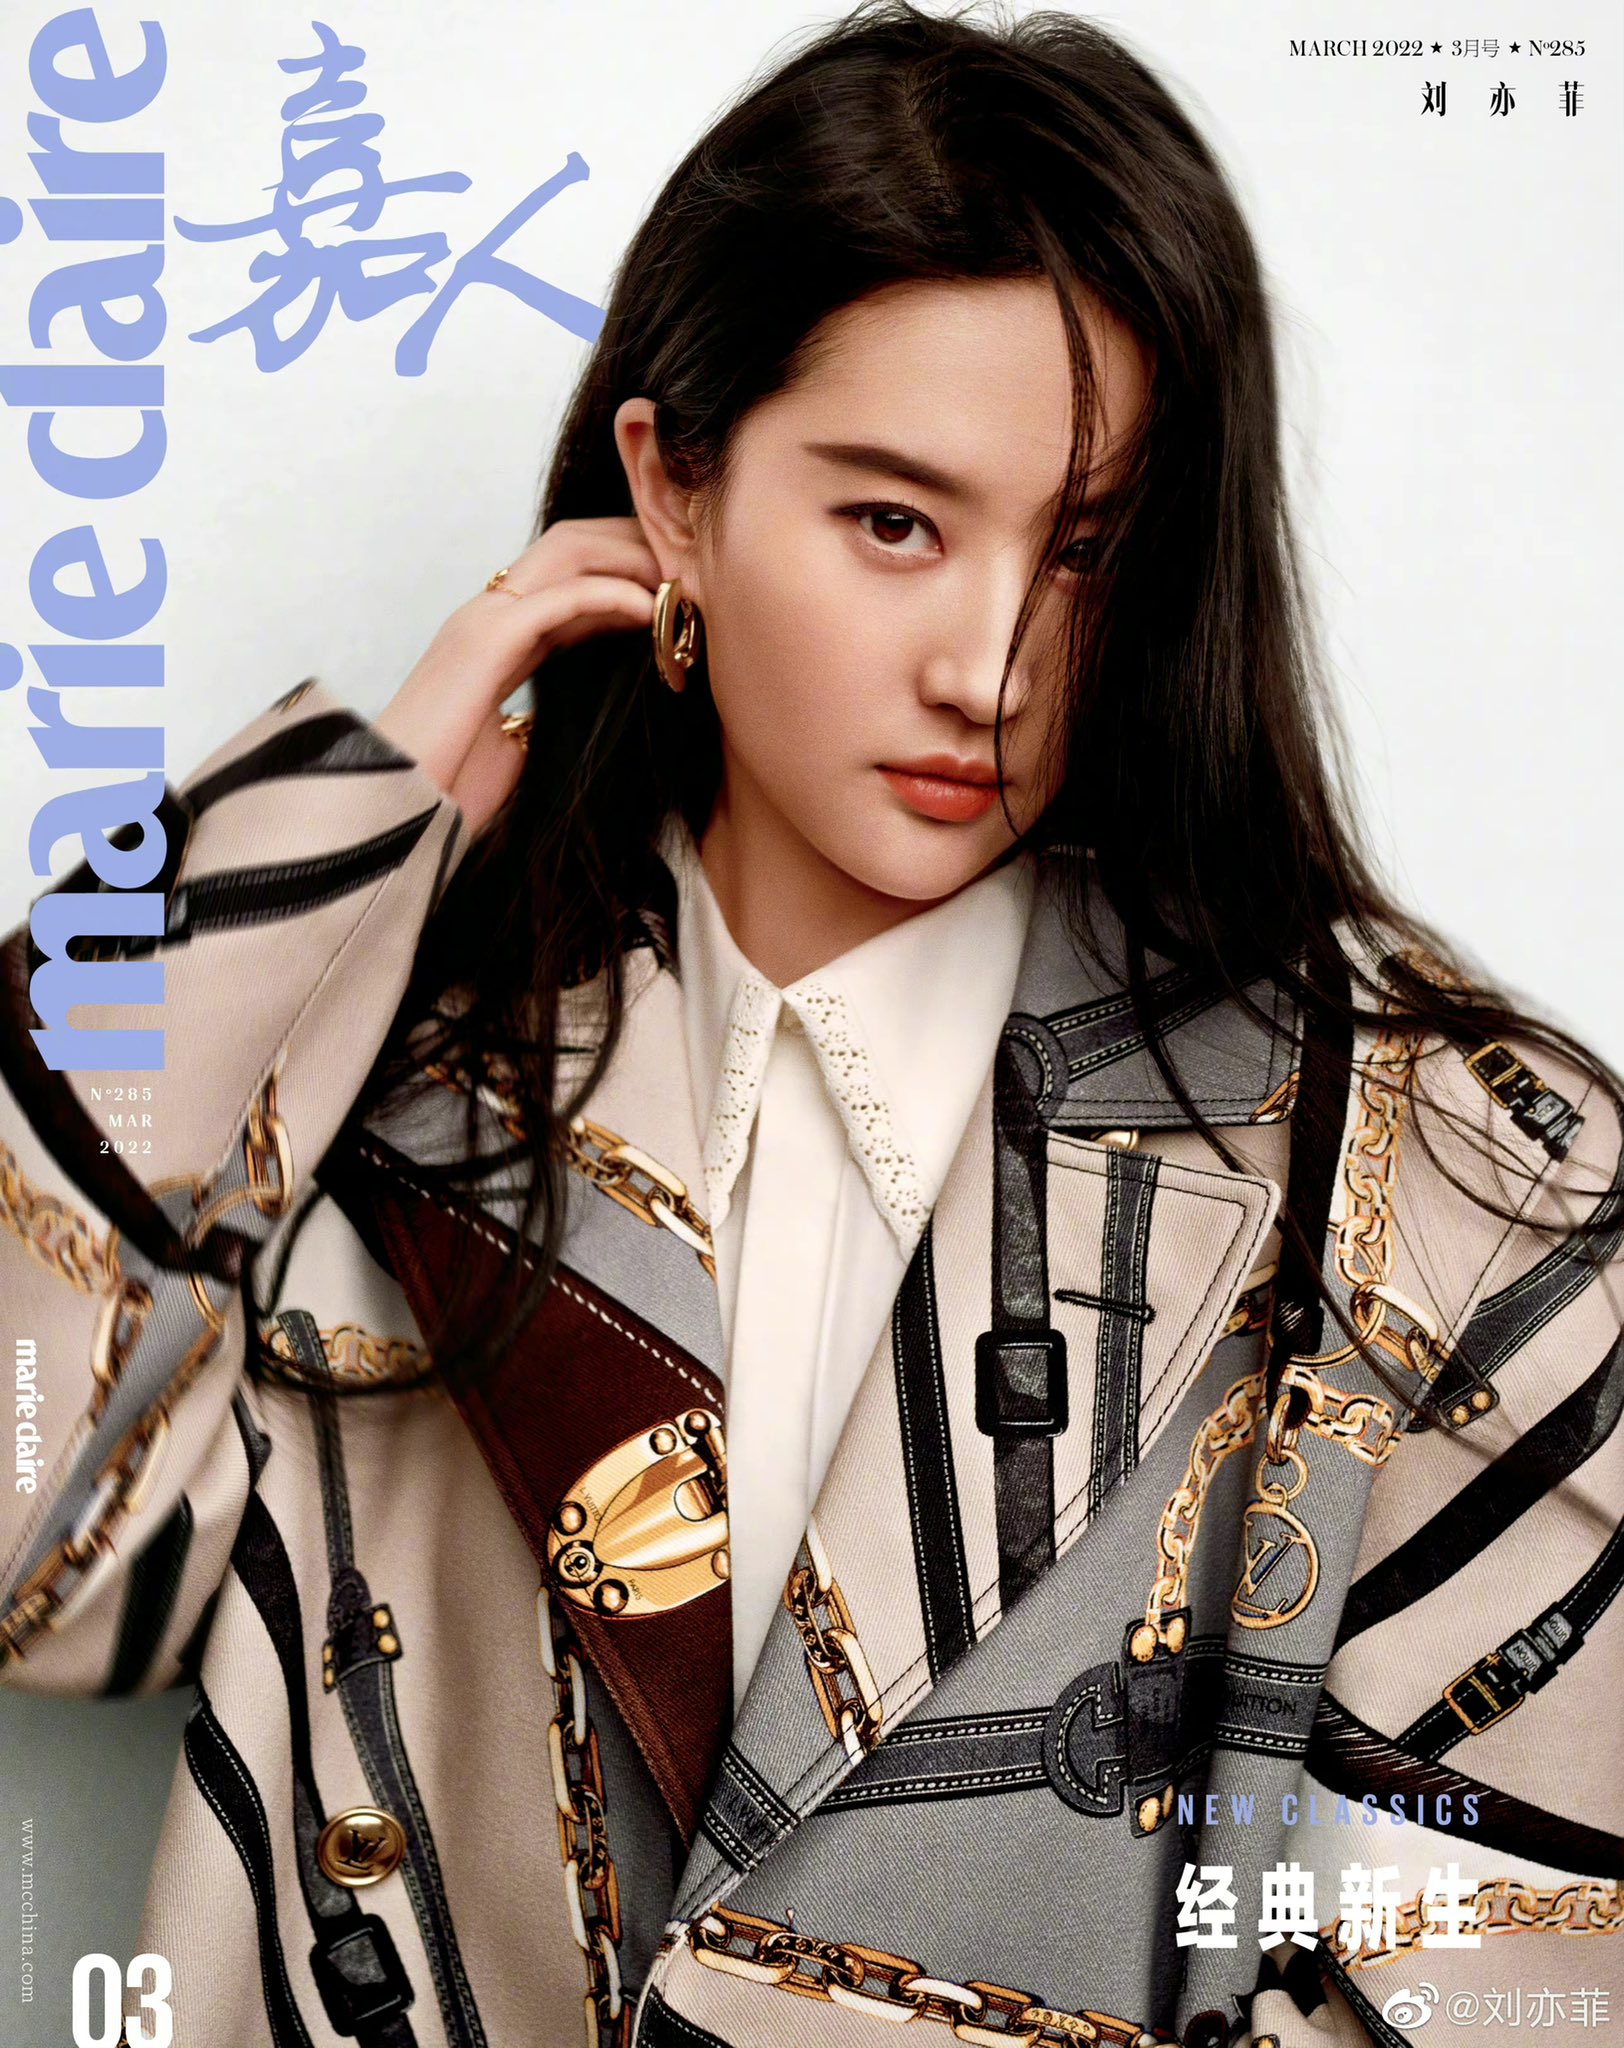 LiuYifei✨ Mulan👑 on X: Liu Yifei on the cover of MarieClaire China March  2022 issue.💐✨ #LiuYifei #liuyifei #LouisVuitton #刘亦菲 #fashion #CrystalLiu   / X